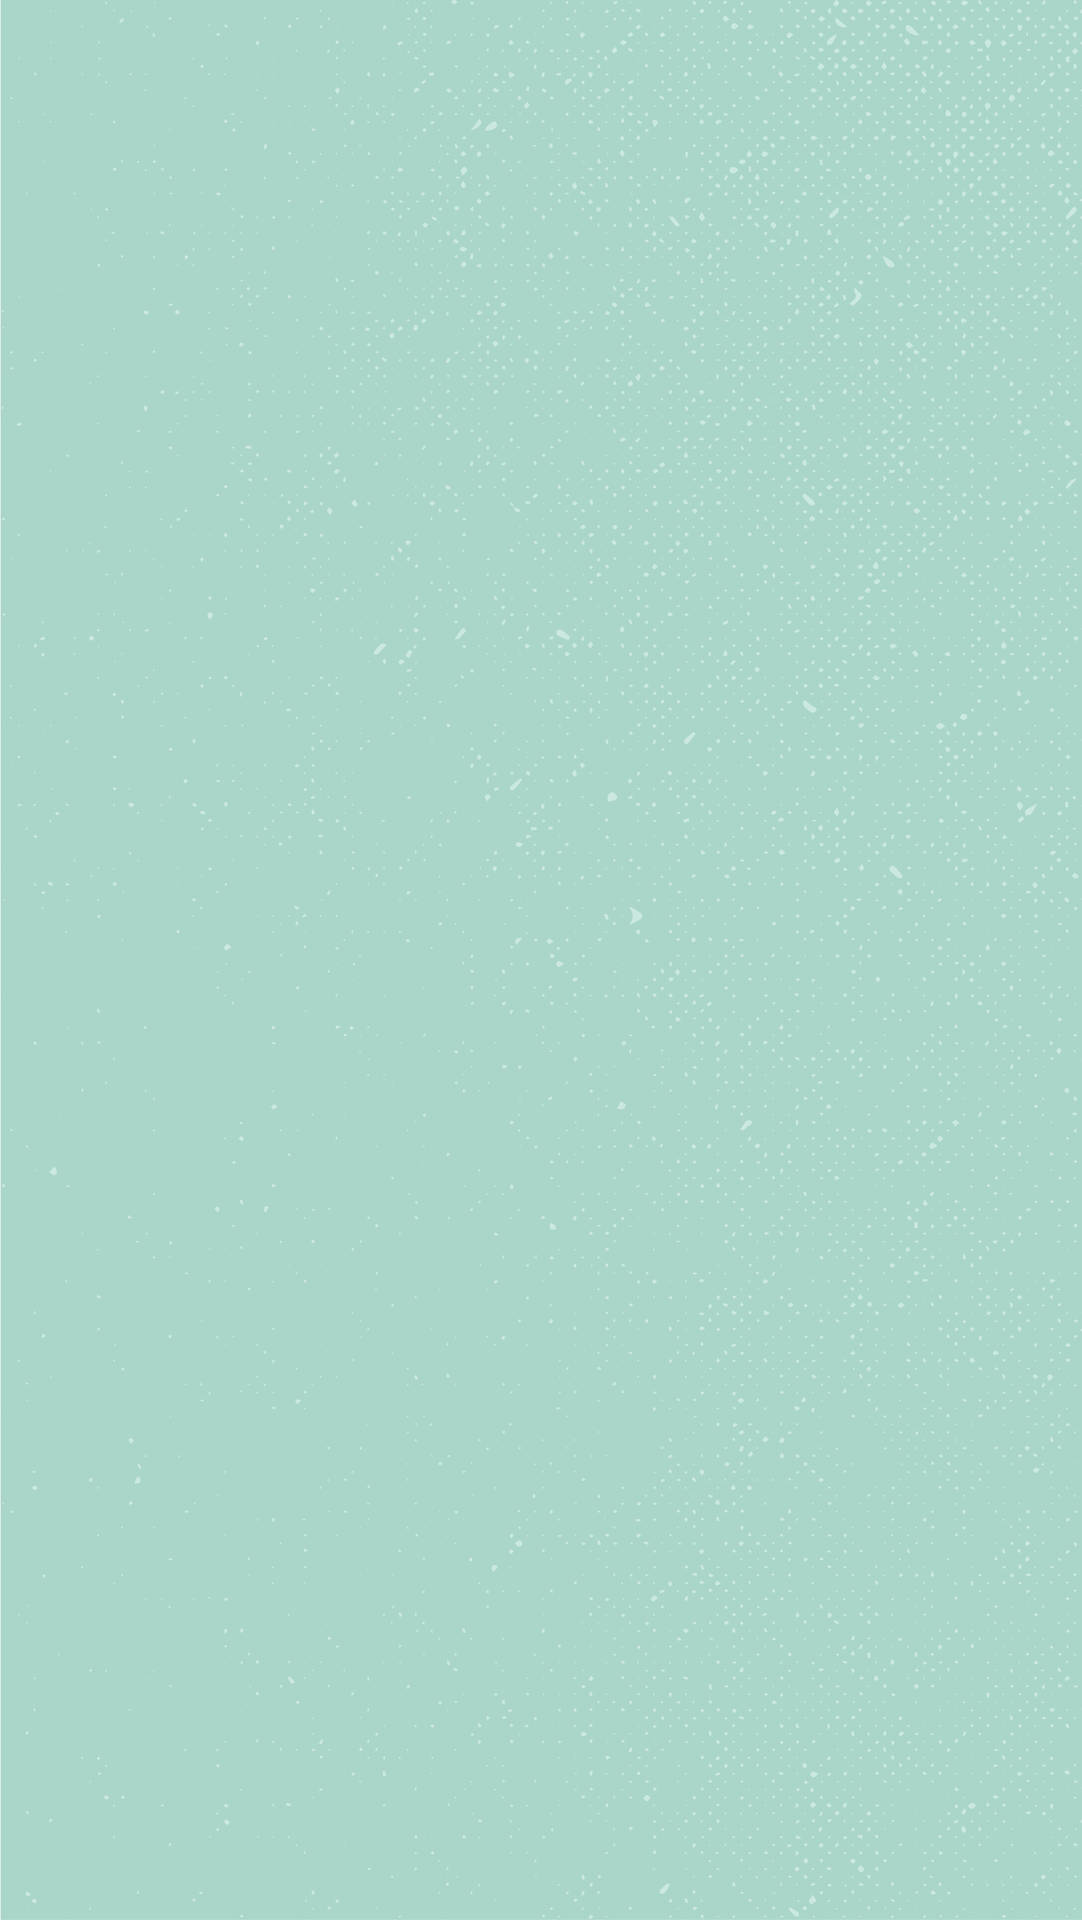 Solid Mint Green Iphone Wallpaper